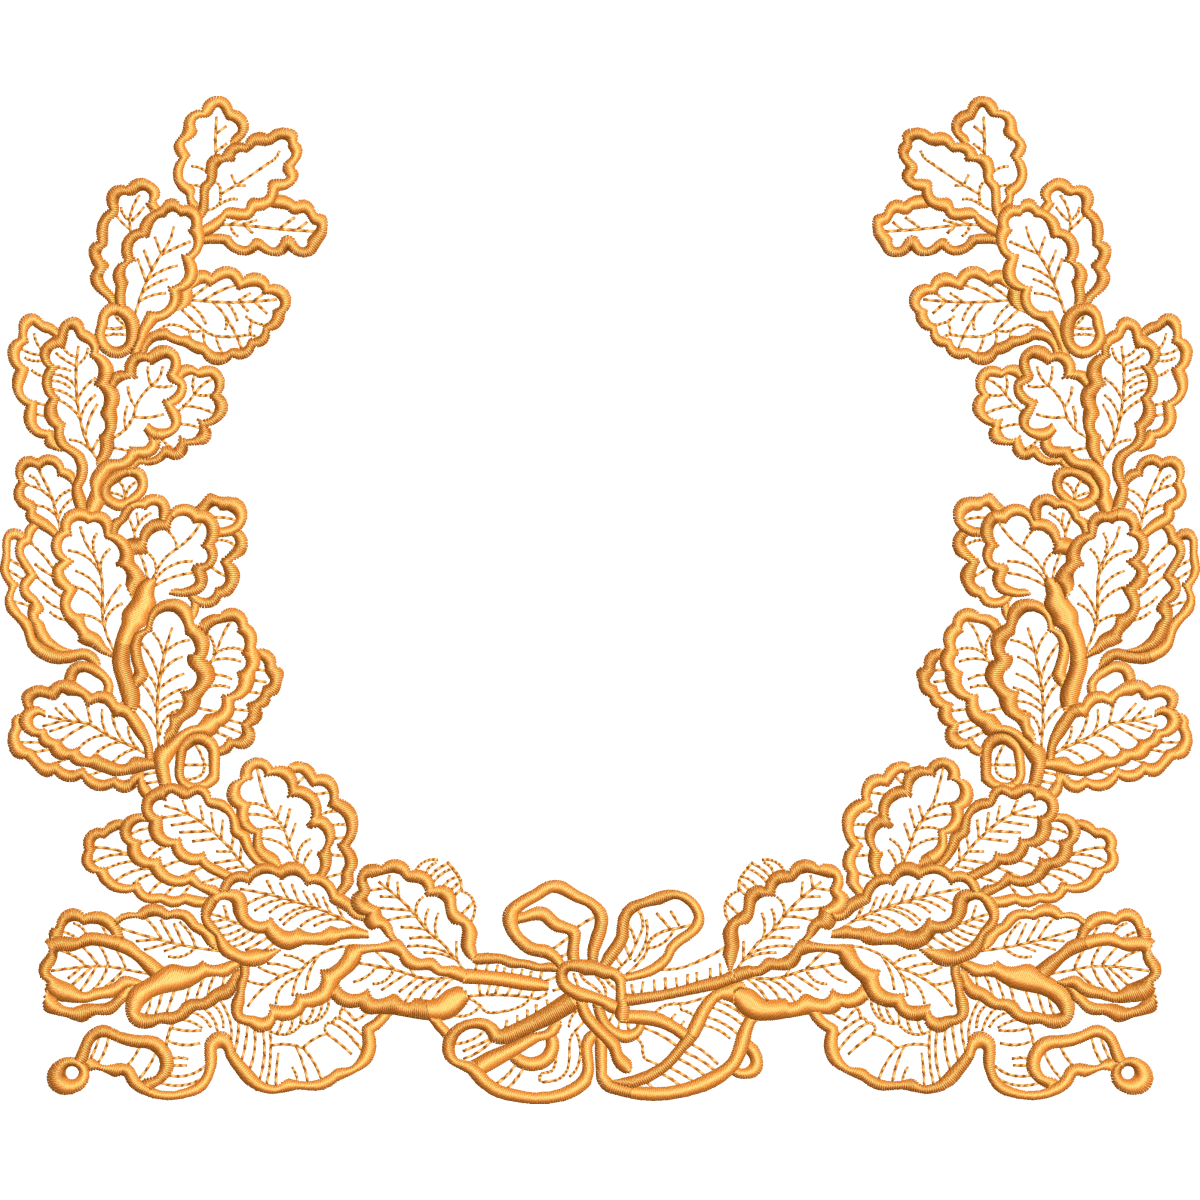 Wreath embroidery design 252f